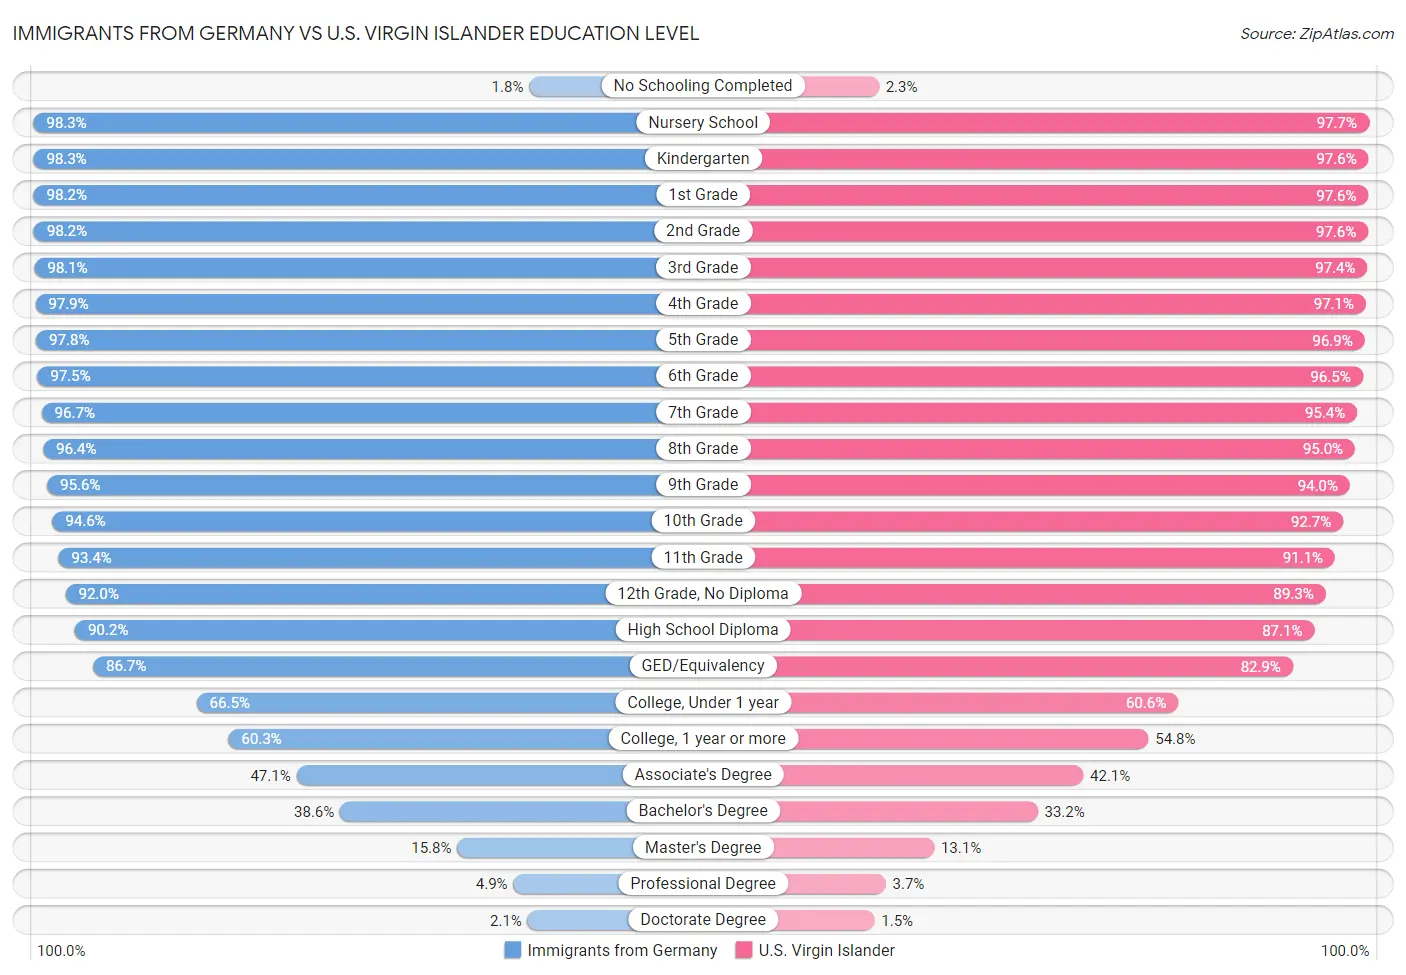 Immigrants from Germany vs U.S. Virgin Islander Education Level